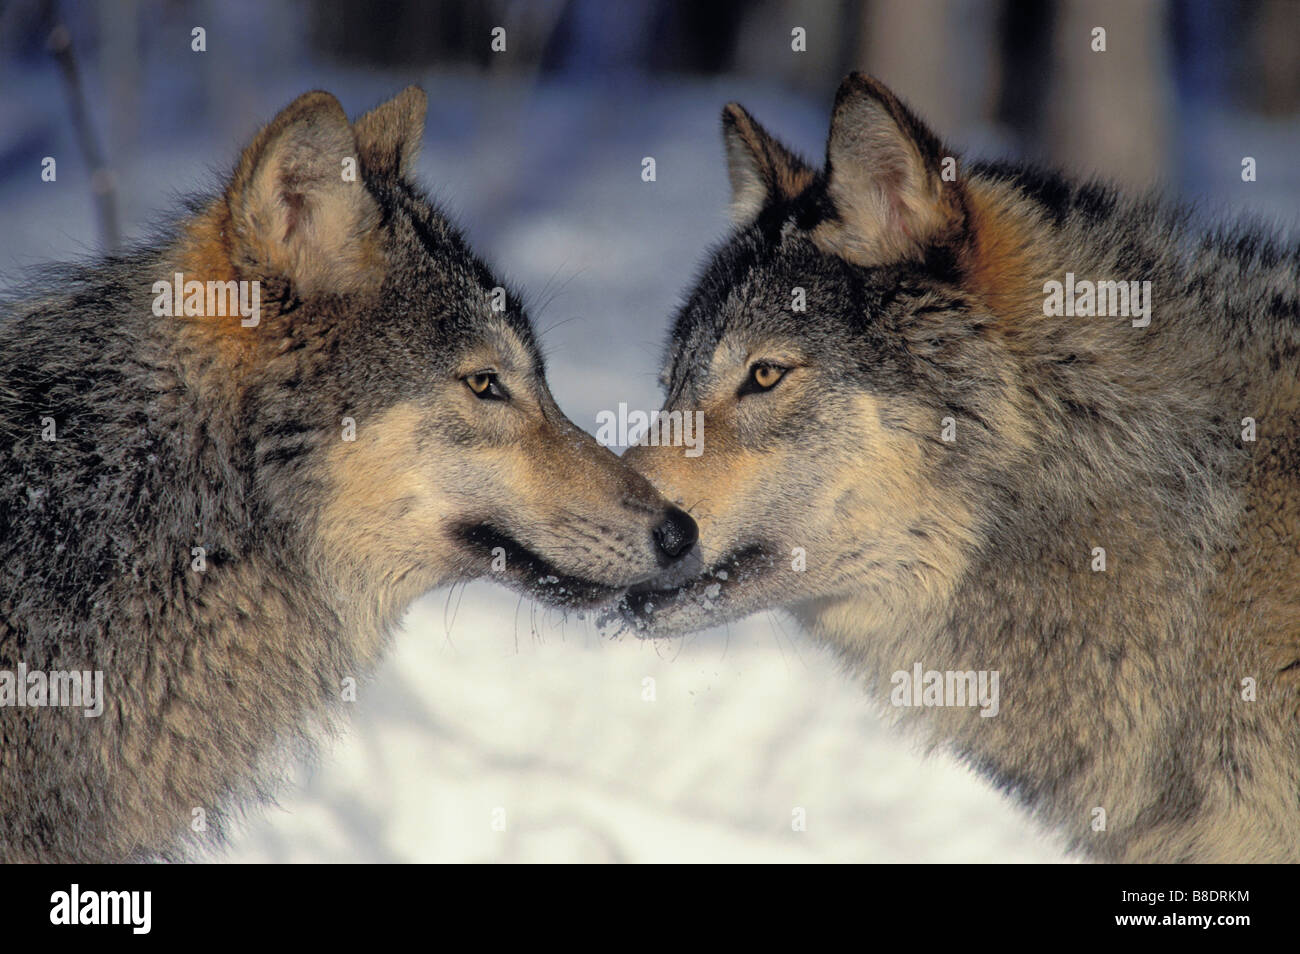 tk0499, Thomas Kitchin; Grauer Wolf Männer begrüßen einander, Winter, Minnesota Stockfoto